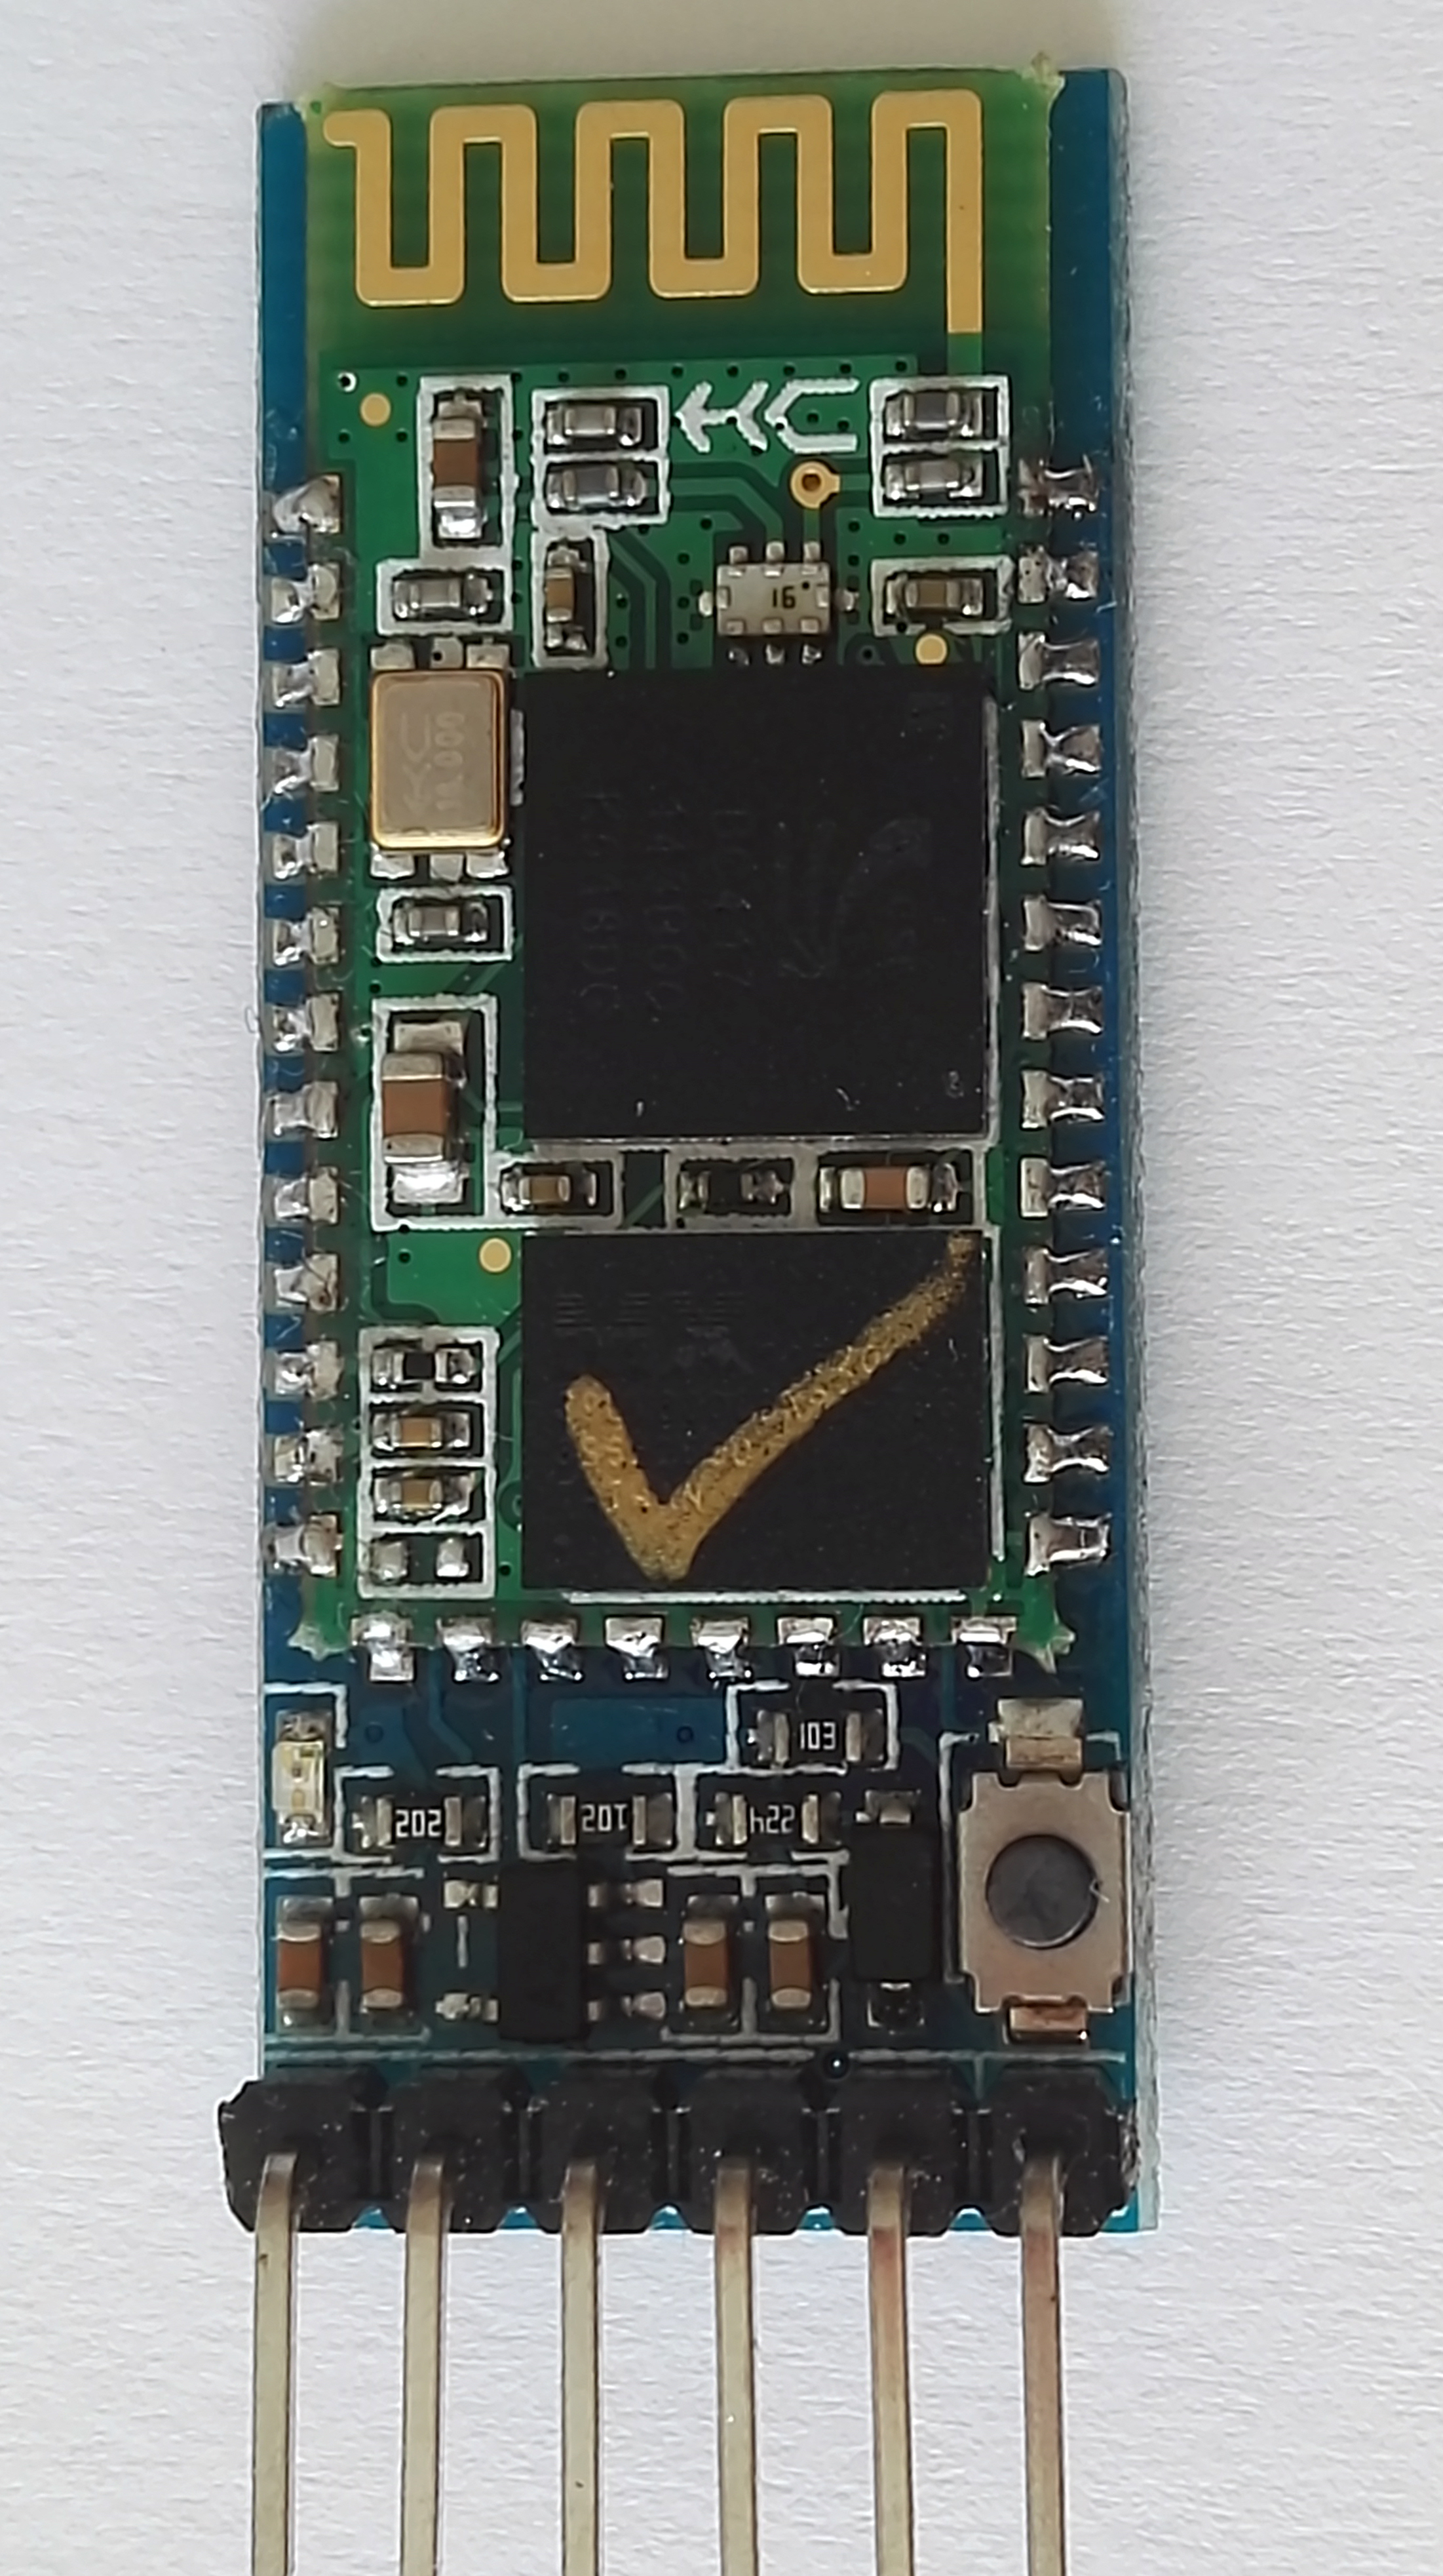 Interfacing Hc 05 Bluetooth Module With Arduino Microdigisoft Com Vrogue 4461